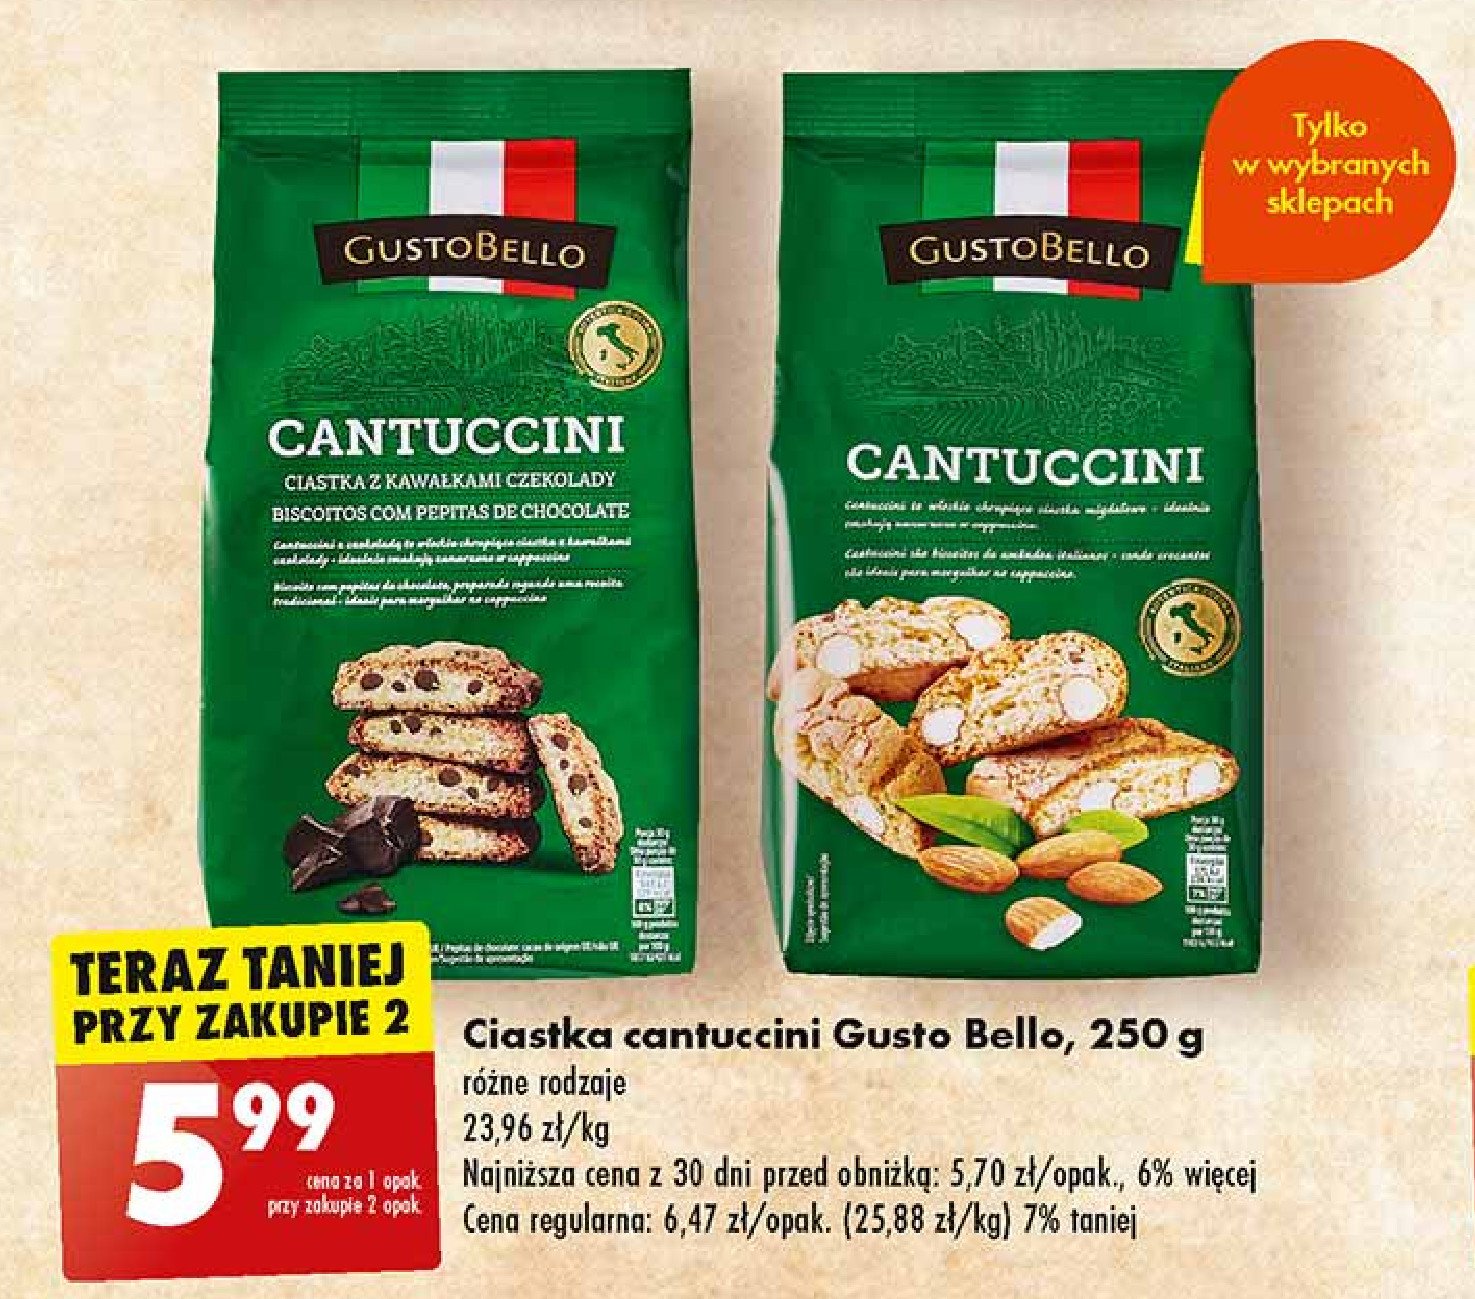 Ciastka cantuccini z czekoladą Gustobello promocja